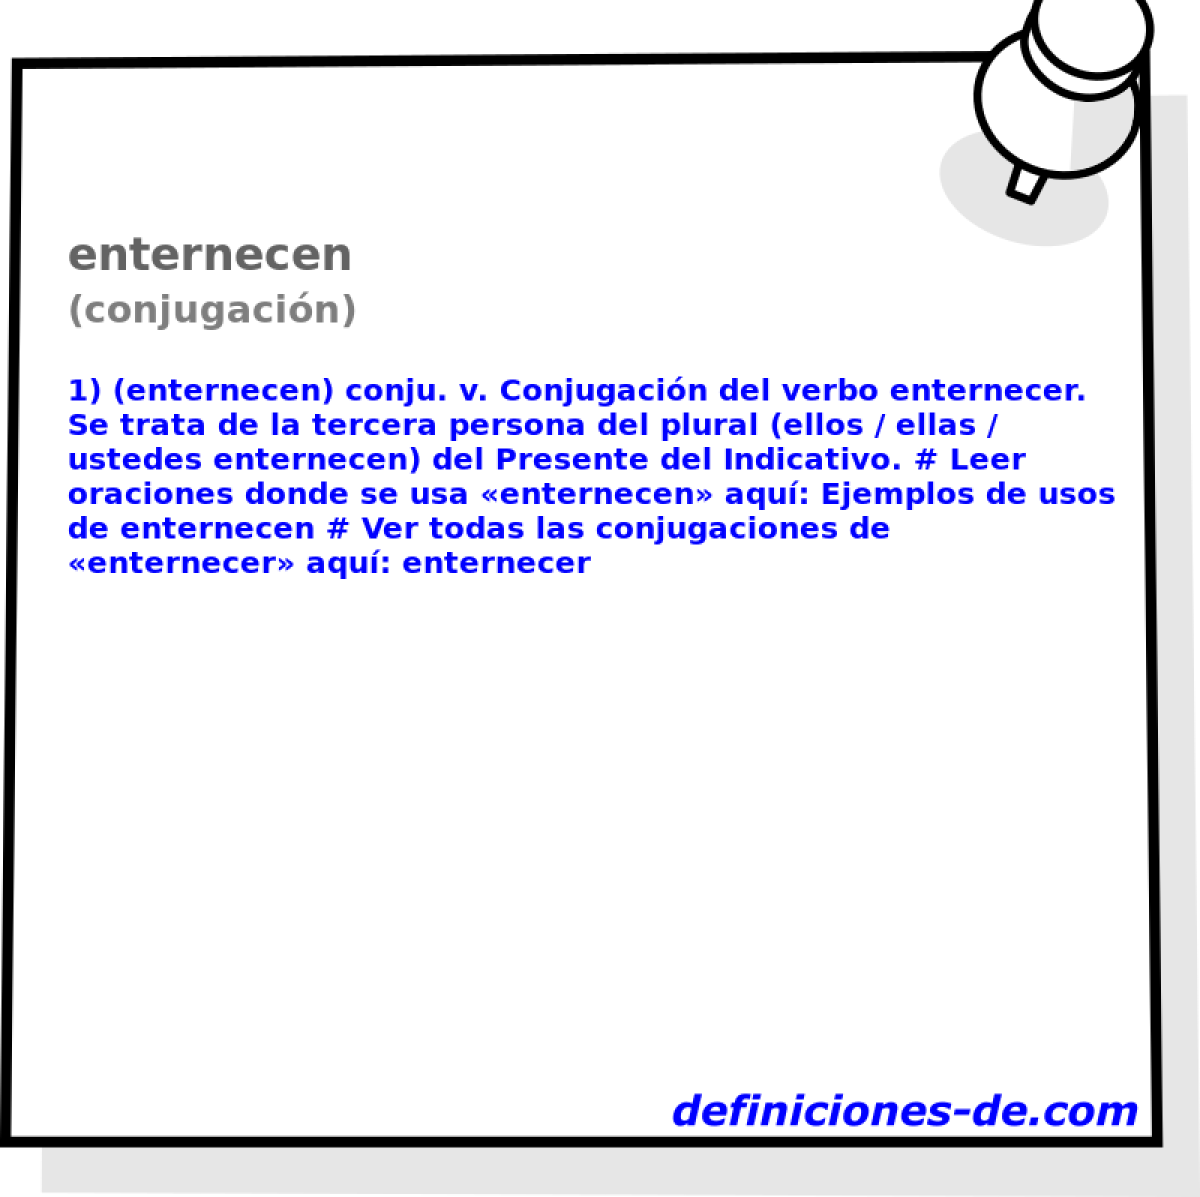 enternecen (conjugacin)